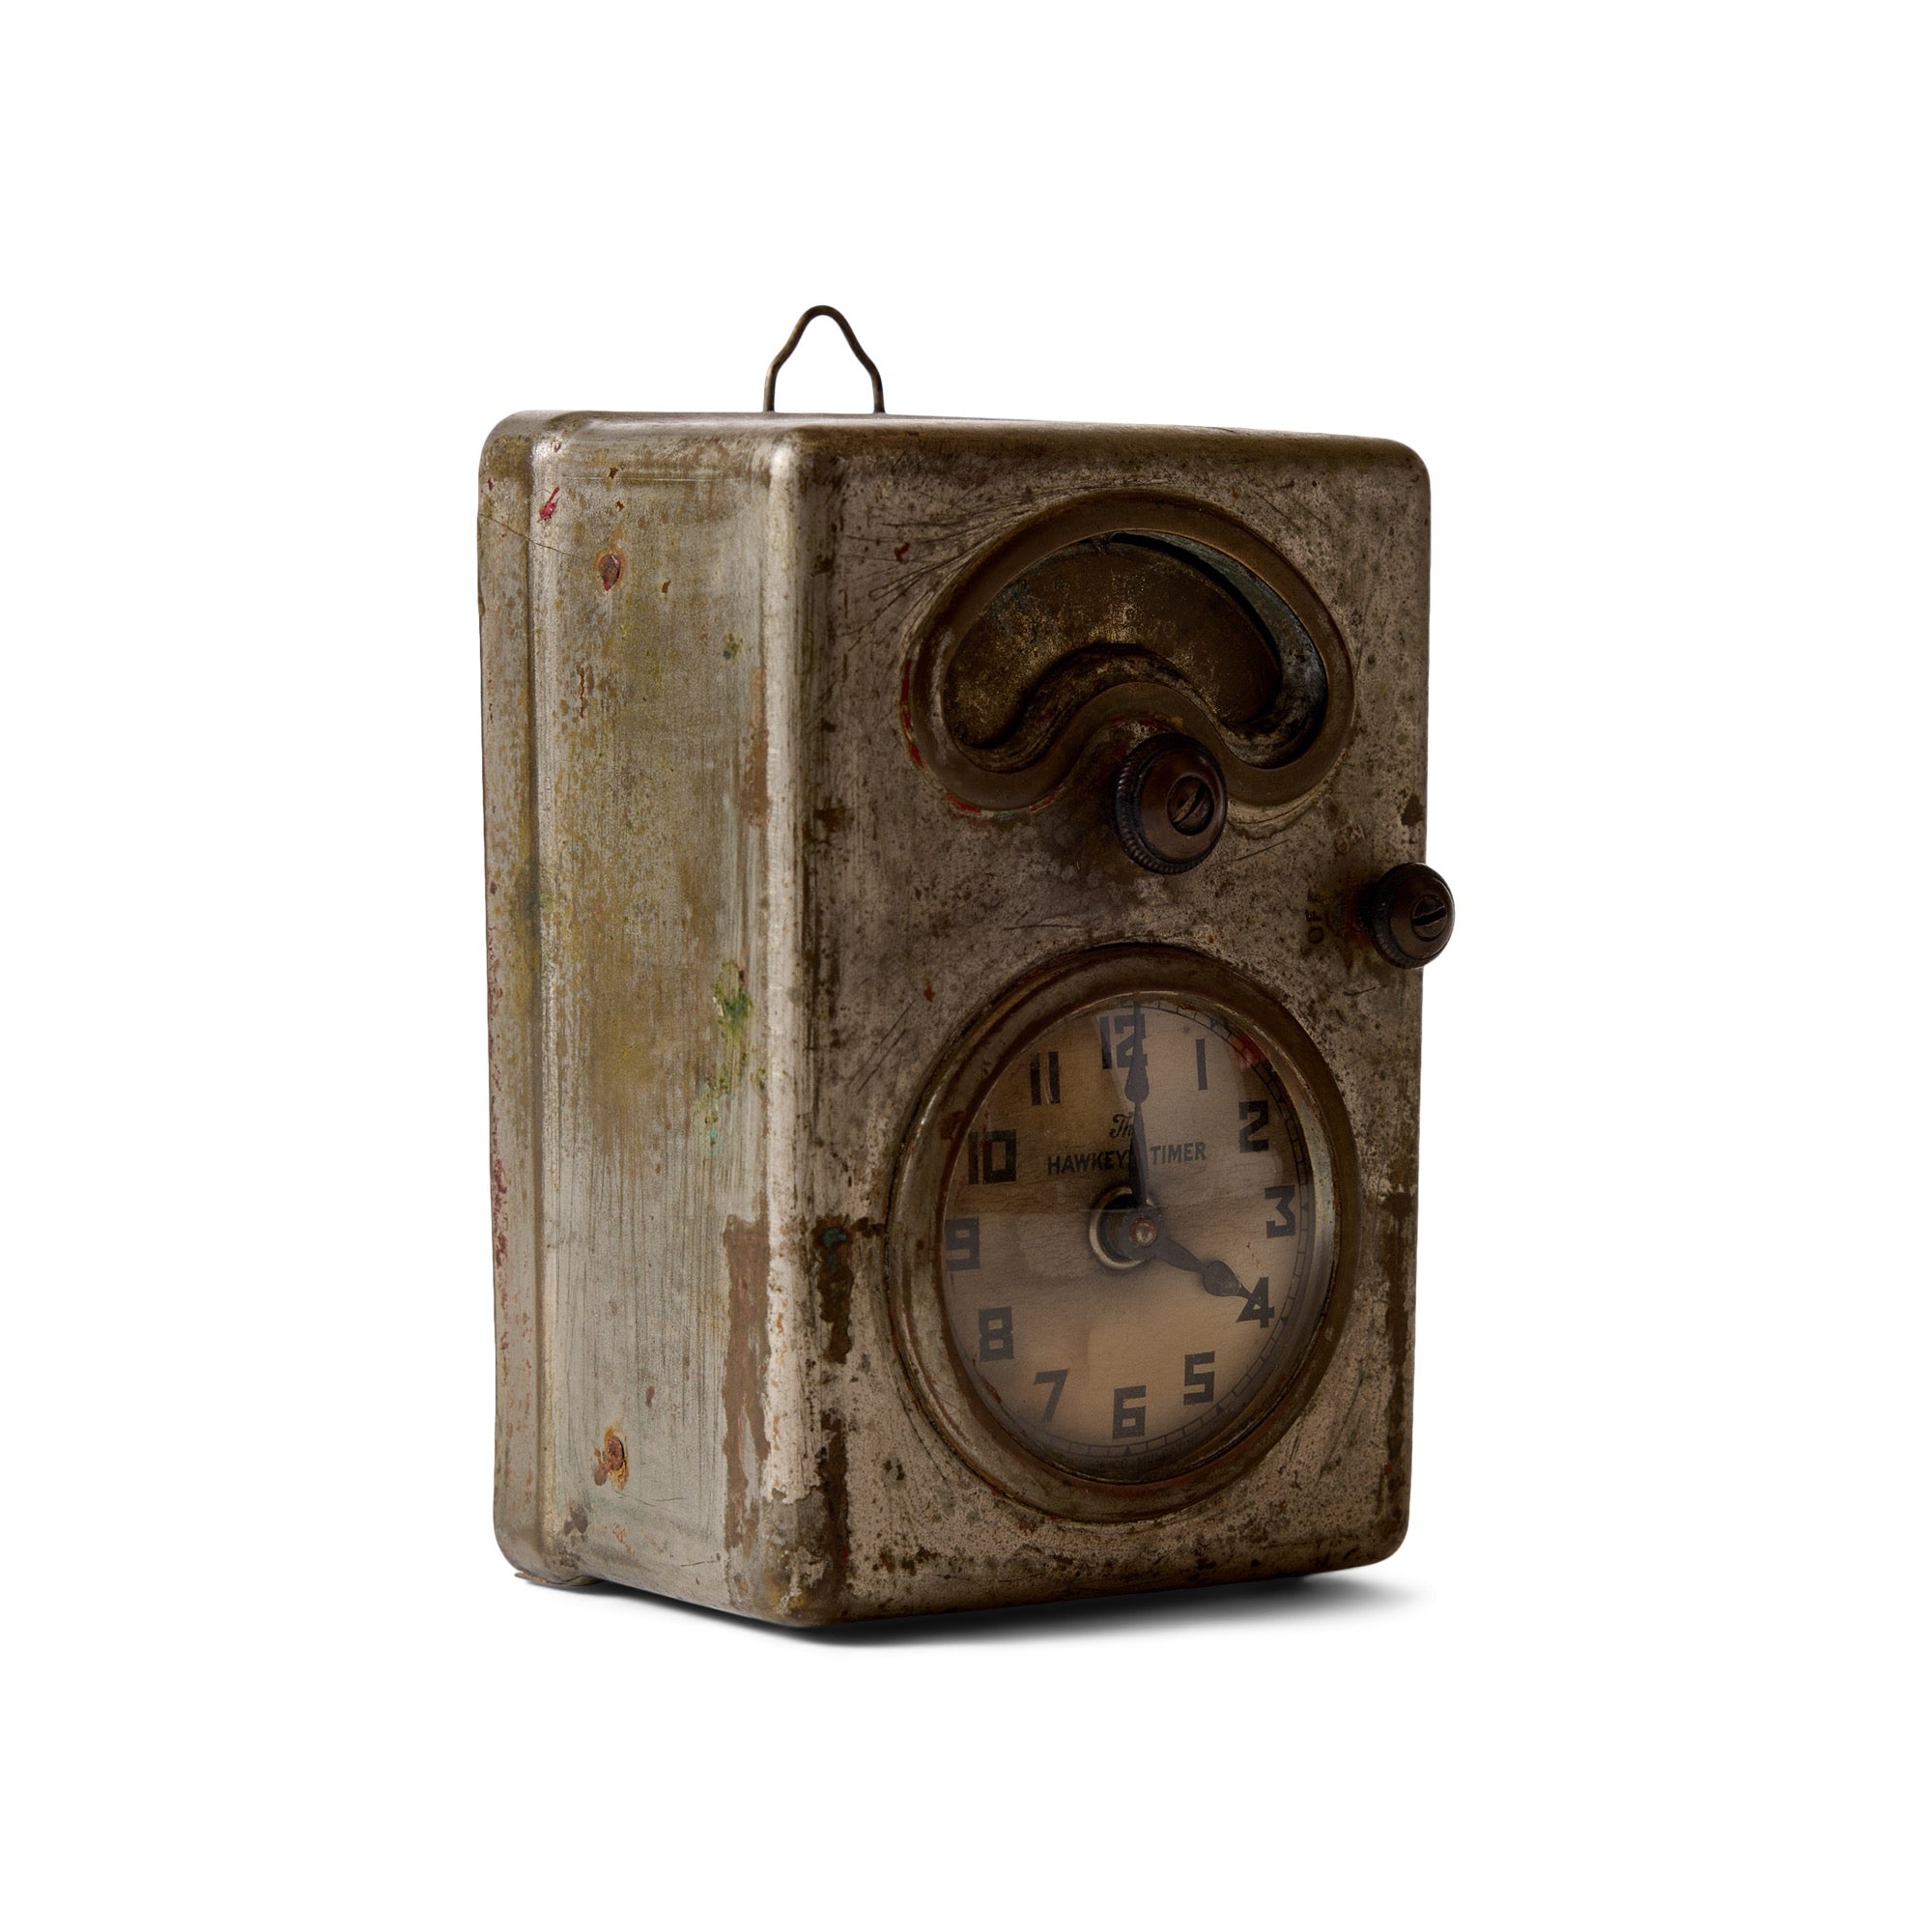 1920's "Hawkeye" Timer / Clock from U.S.A.